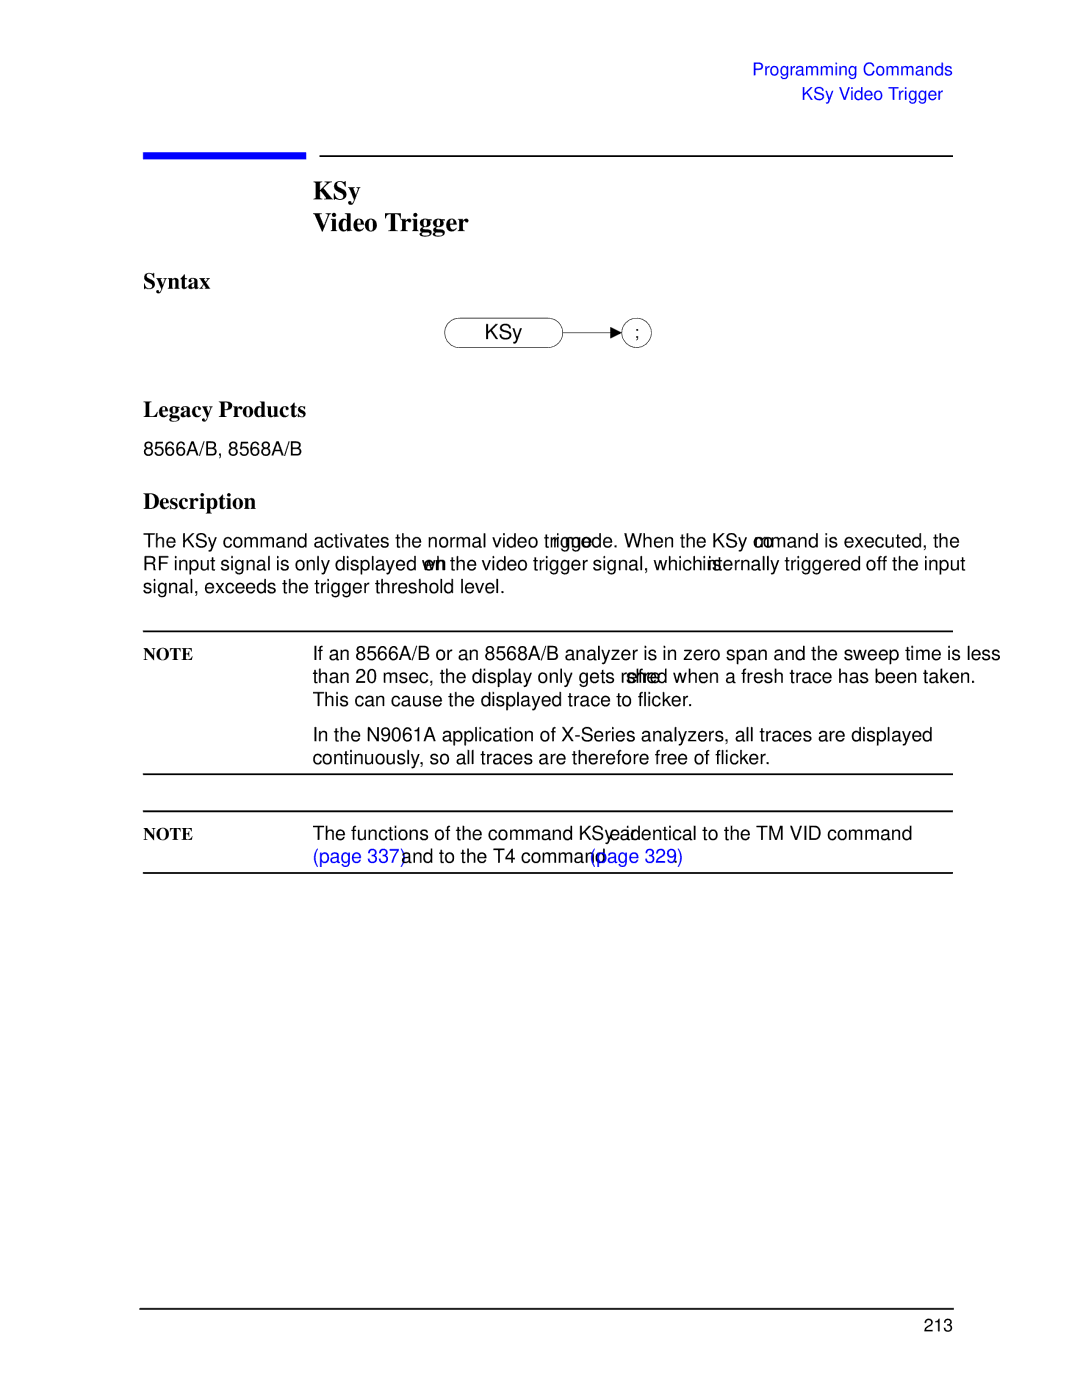 Agilent Technologies N9030a manual KSy Video Trigger 